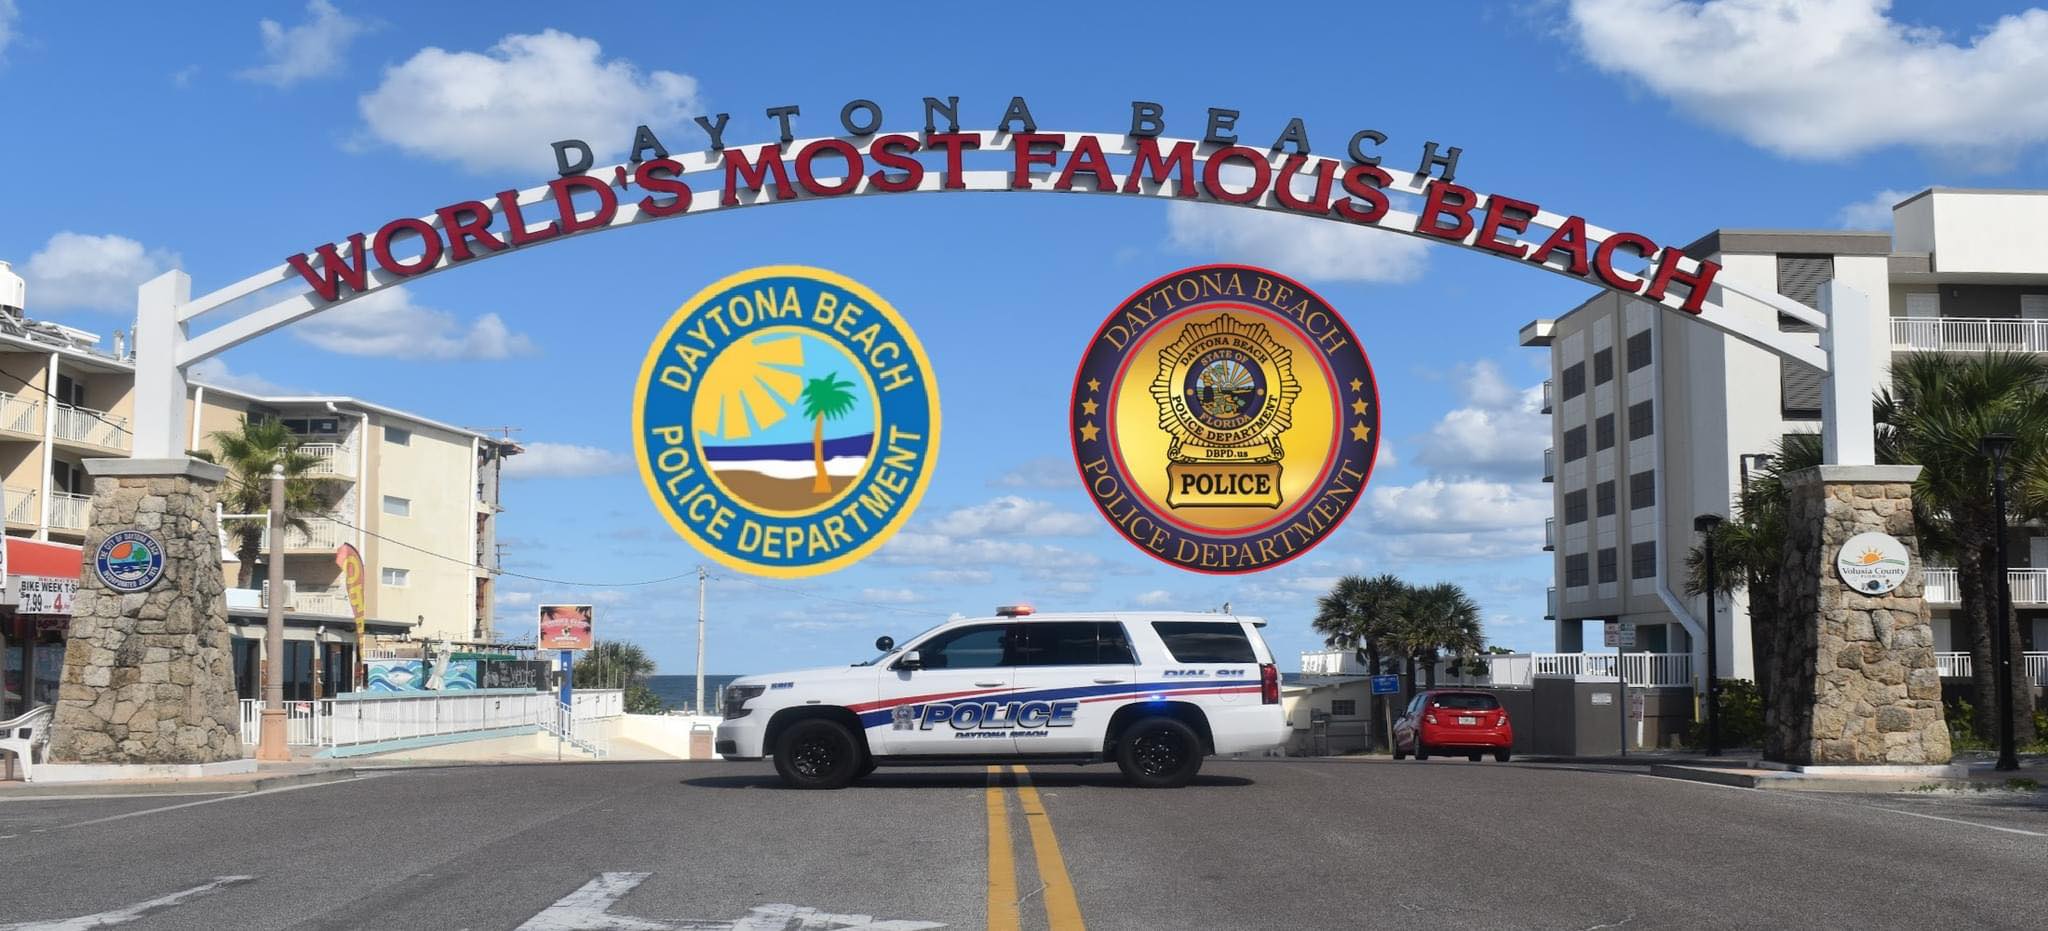 Daytona Beach Police Department